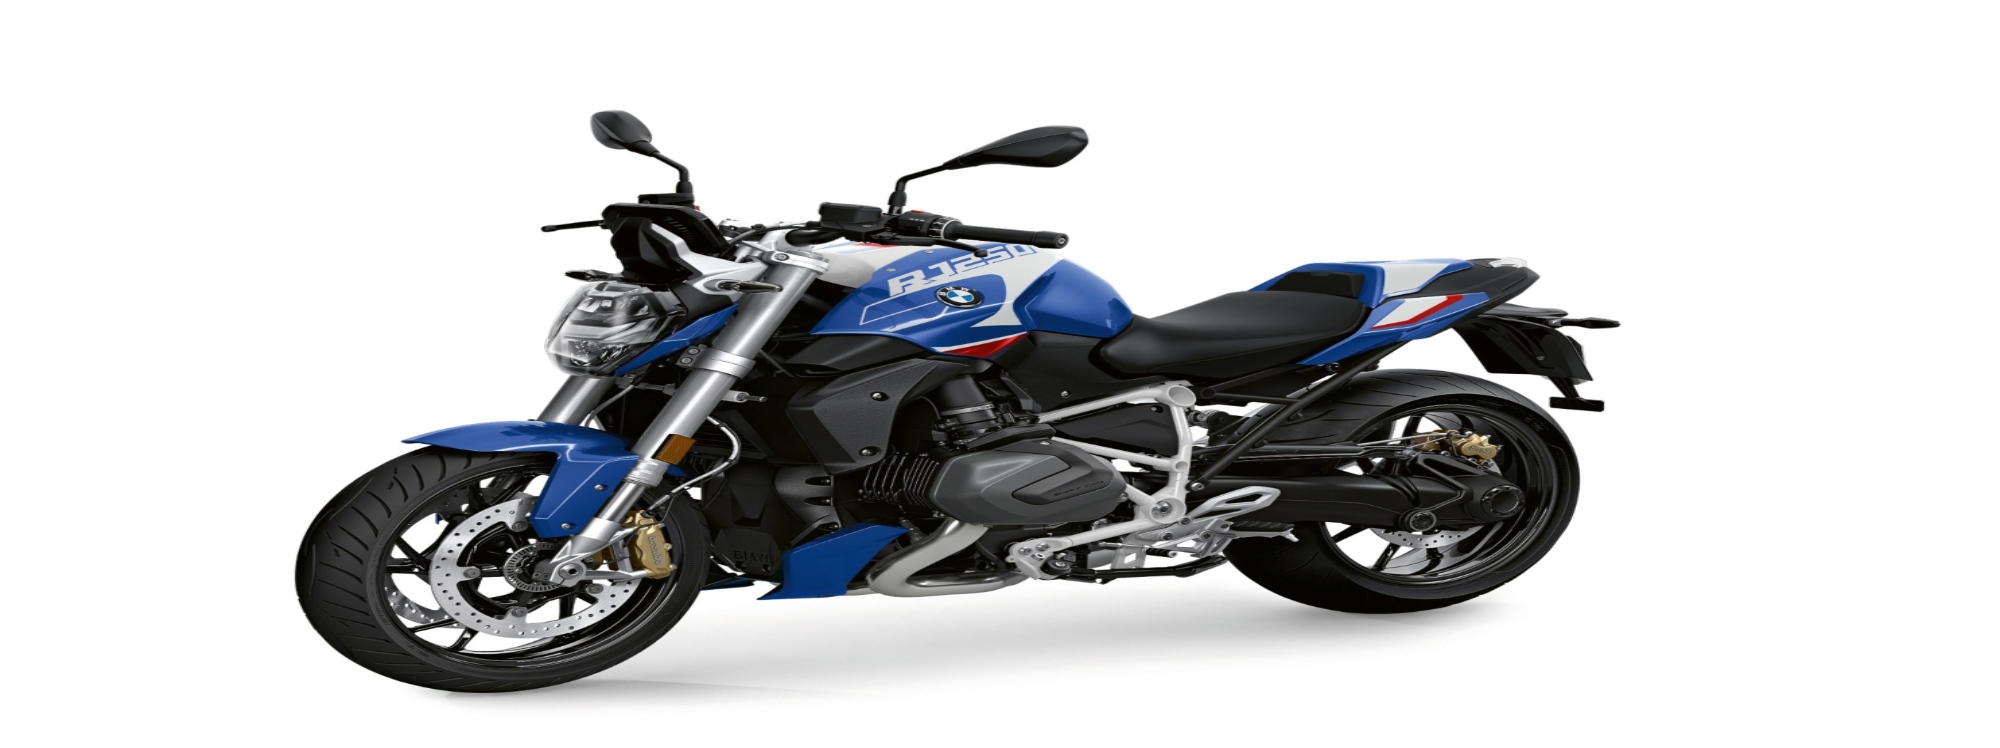 BMW presenta la nueva motocicleta R1250